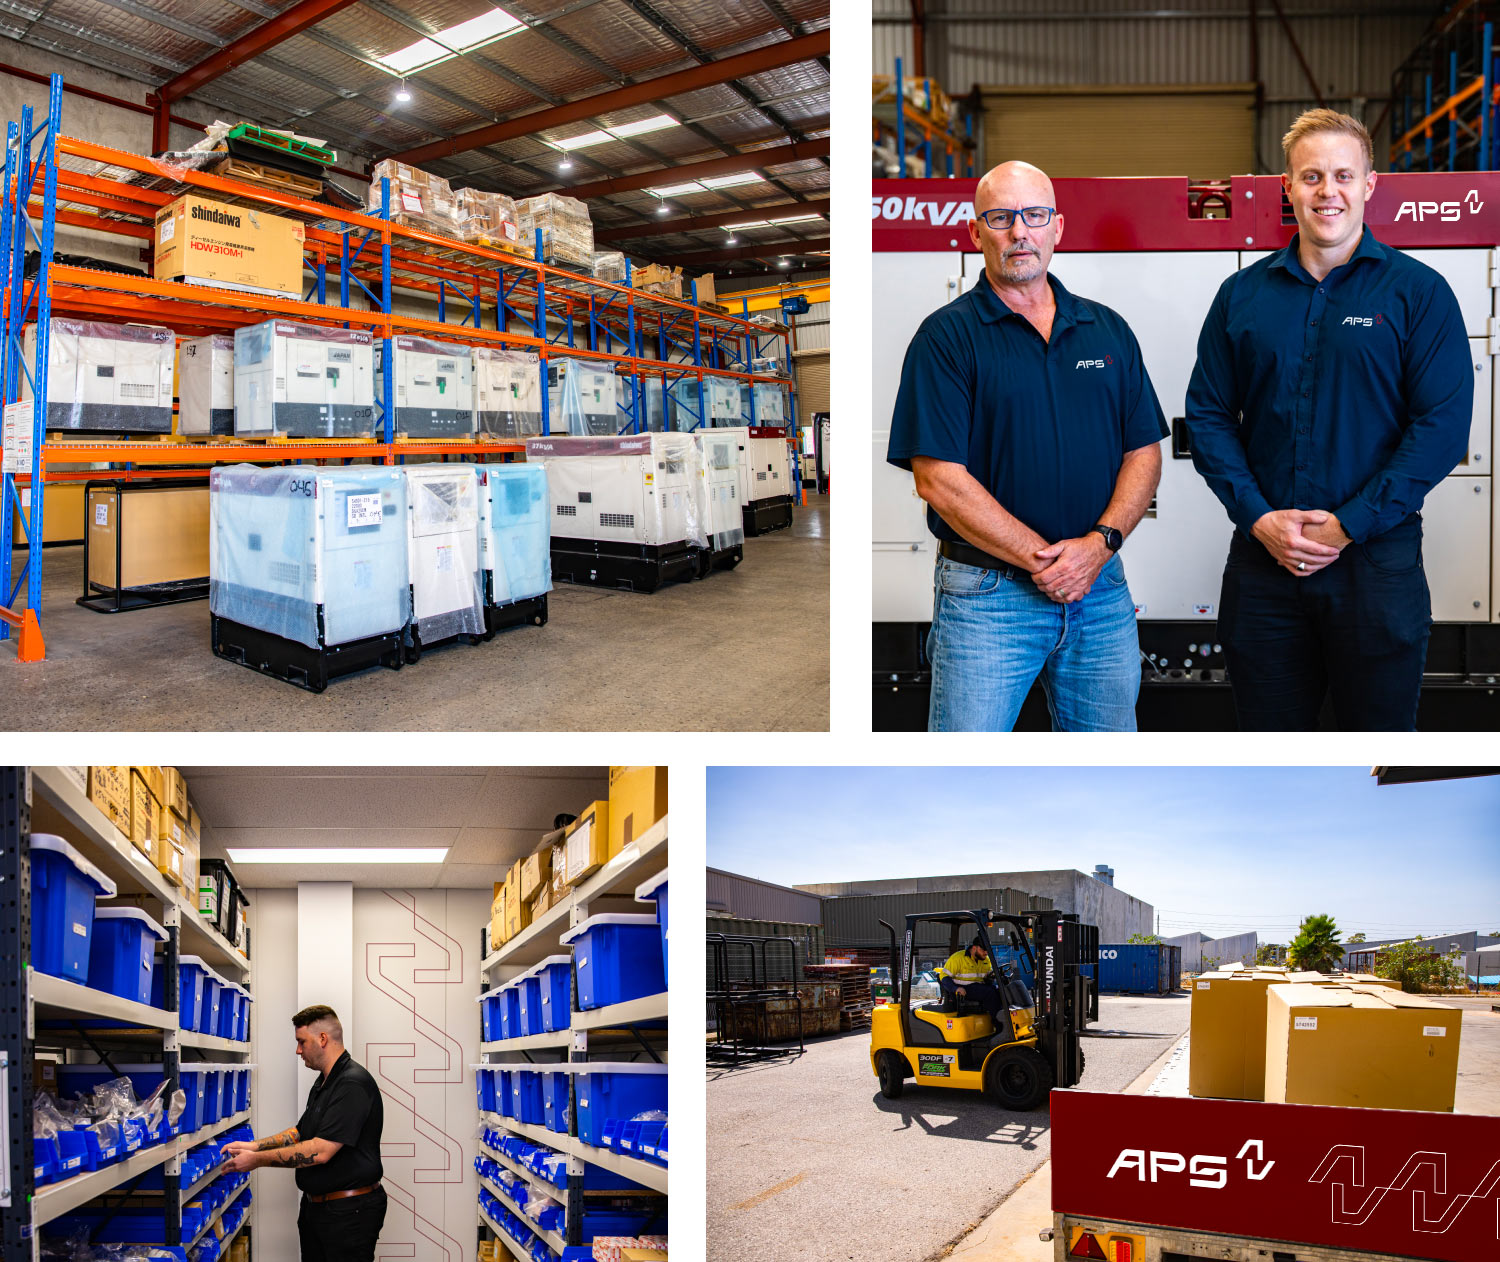 APS employees supplying generators and welders around Australia